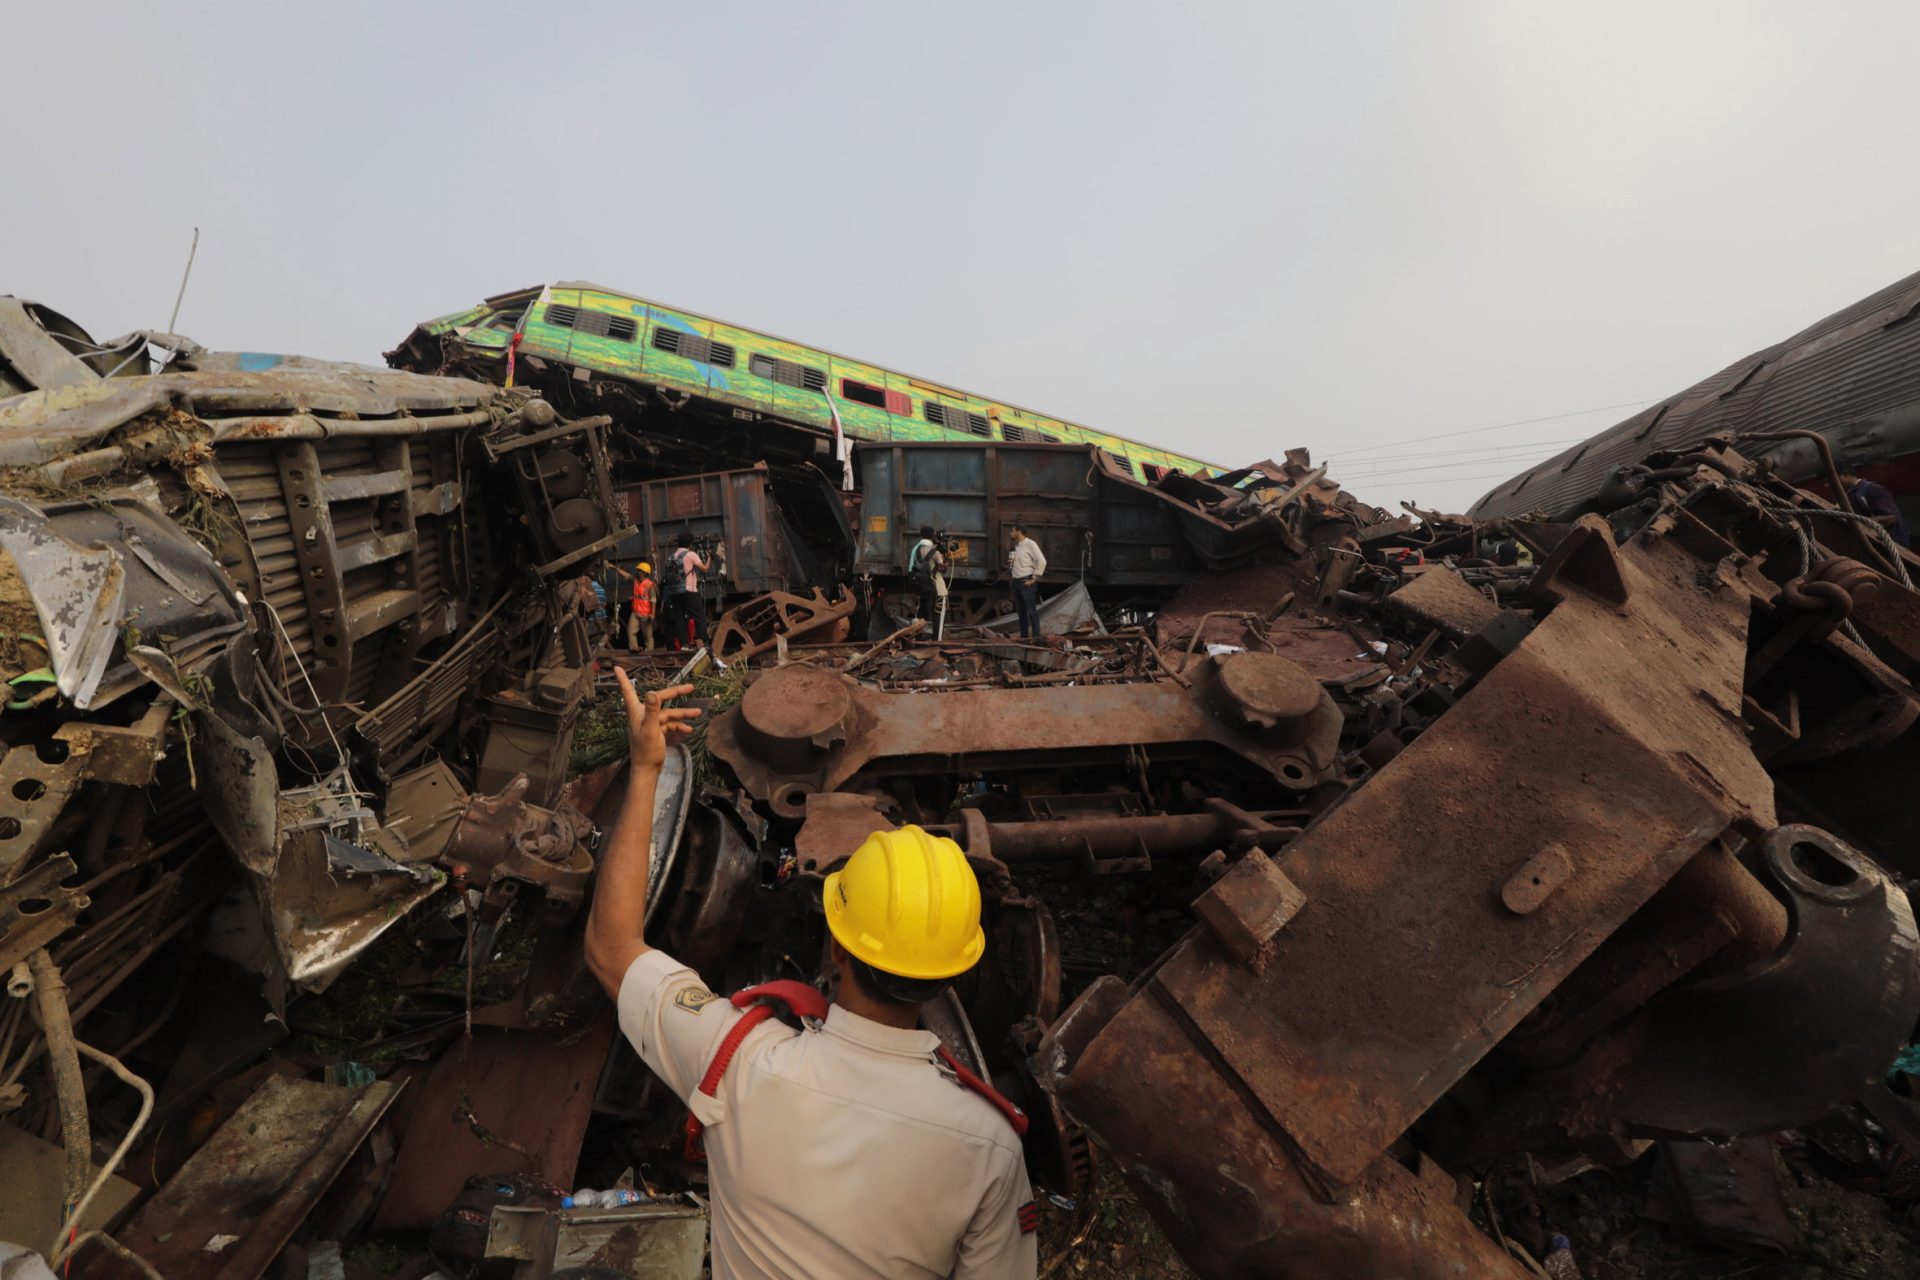 238 dead, 900 injured in train crash in India
